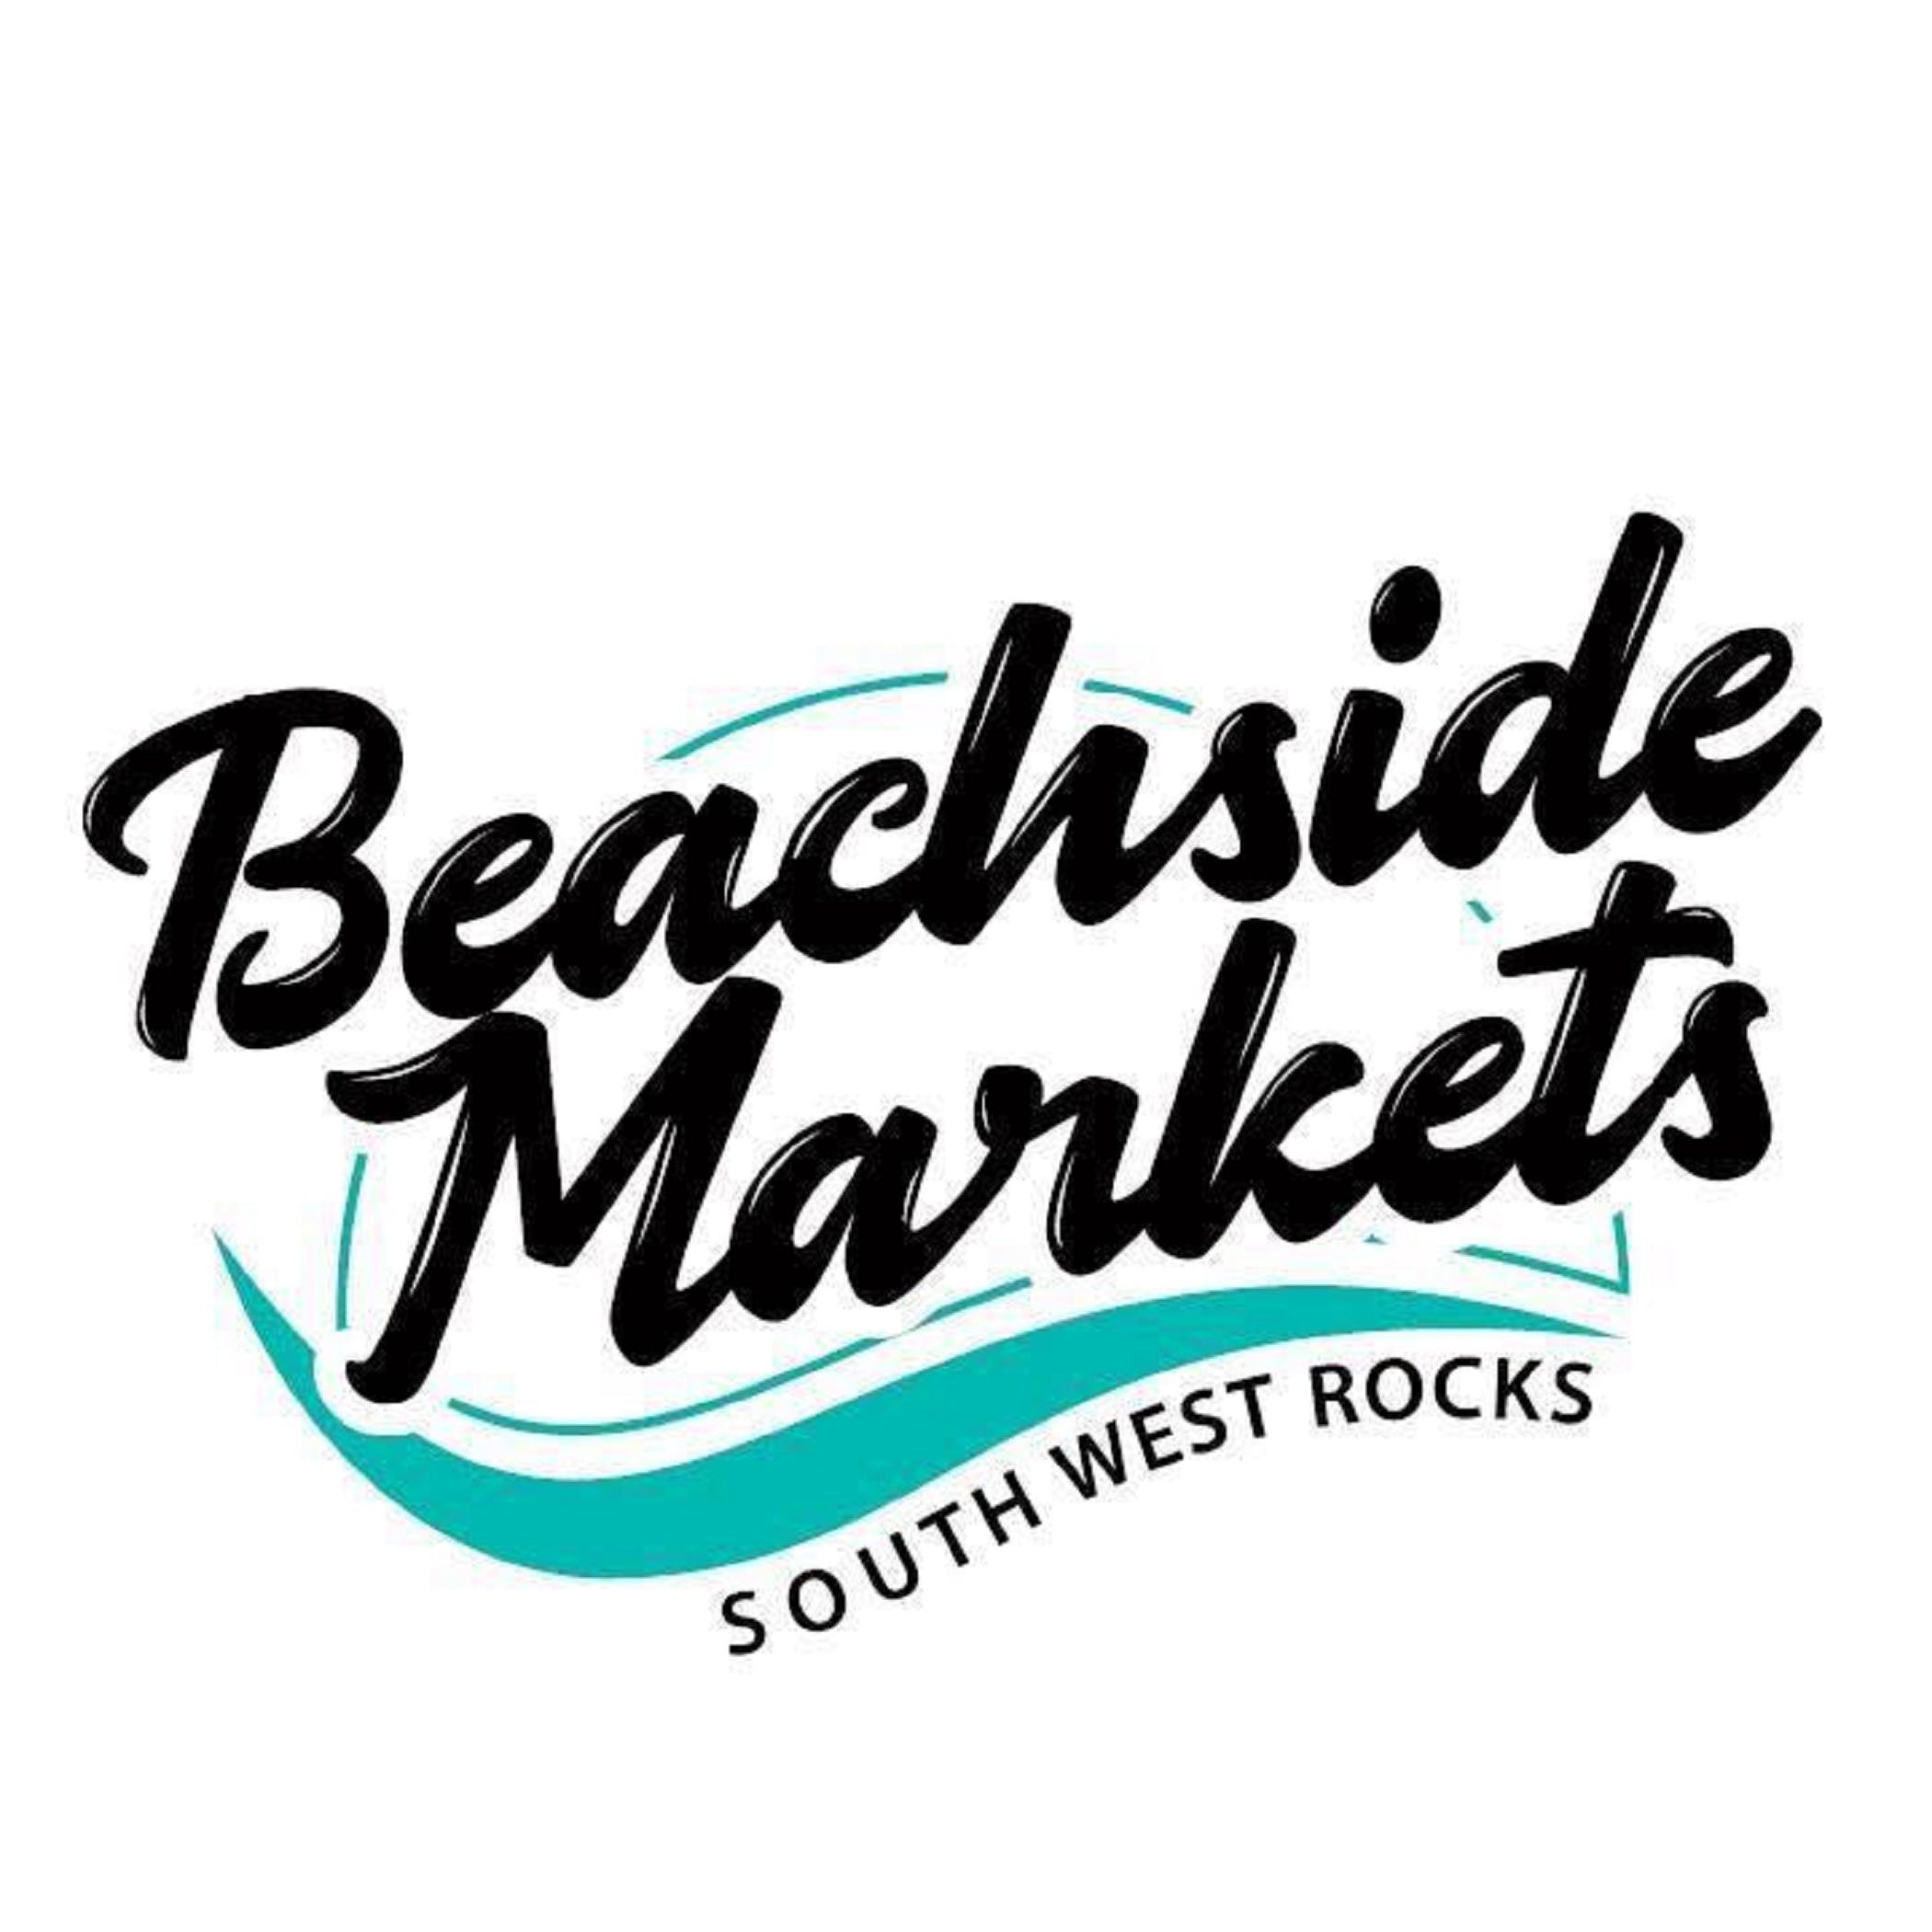 Beachside Markets South West Rocks - Tourism Canberra